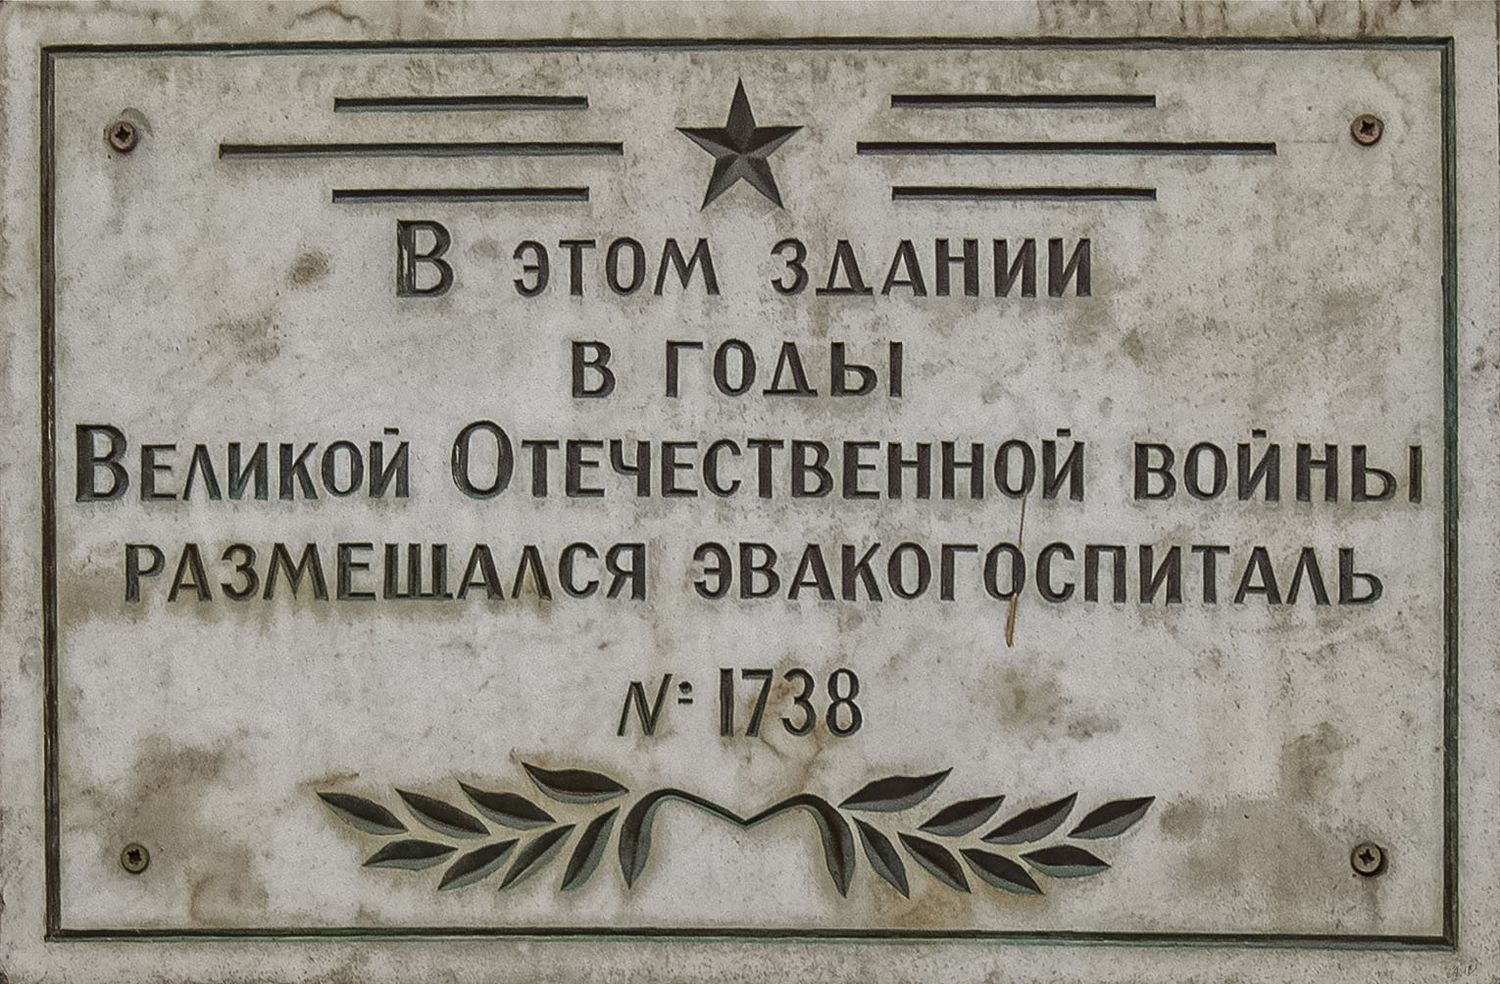 Ufa, Улица Цюрупы, 9. Ufa — Memorial plaques